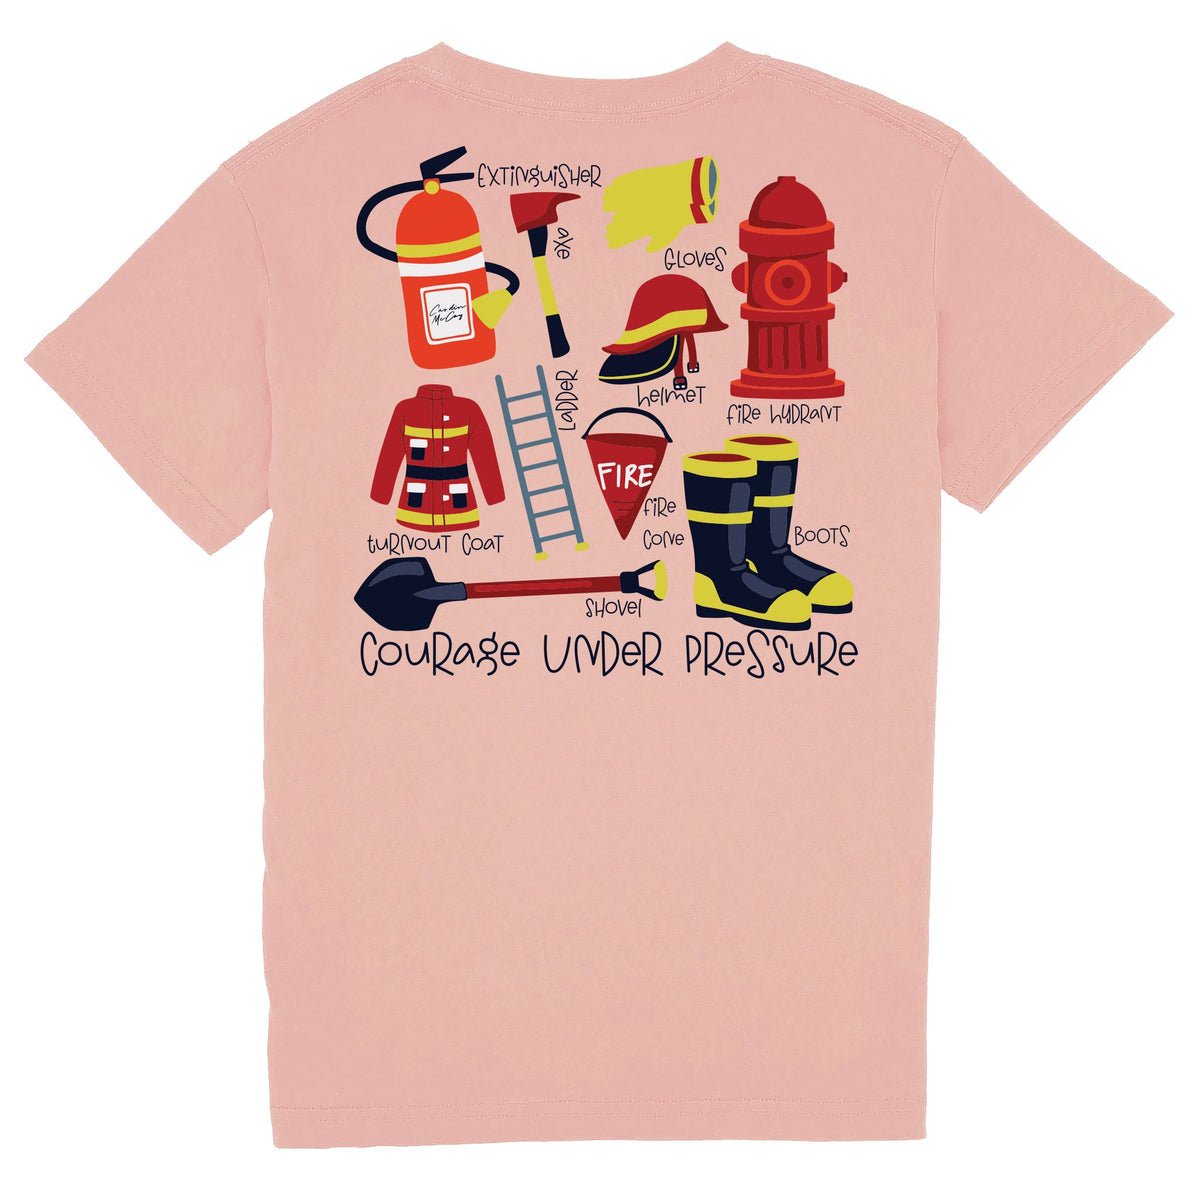 Kids' Courage Under Pressure Short Sleeve Pocket Tee Short Sleeve T-Shirt Cardin McCoy Rose Tan XXS (2/3) 